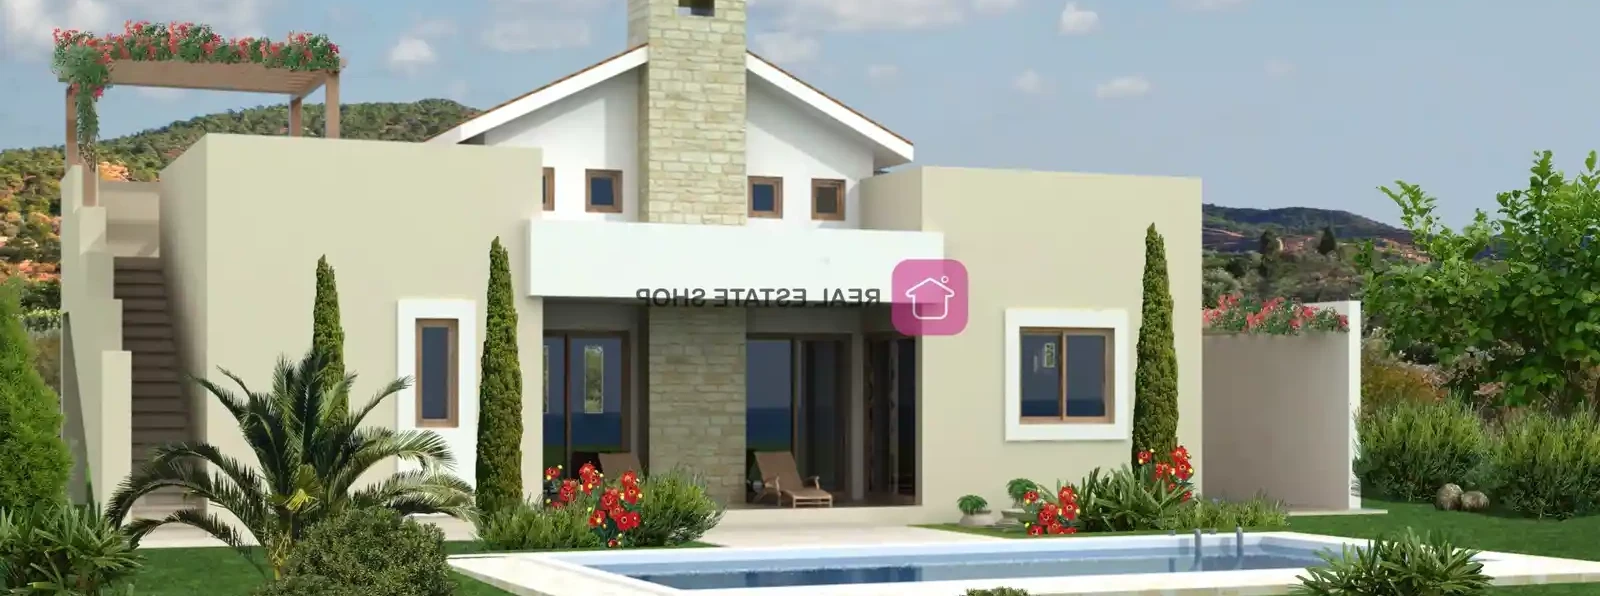 3-bedroom villa fоr sаle €508.000, image 1